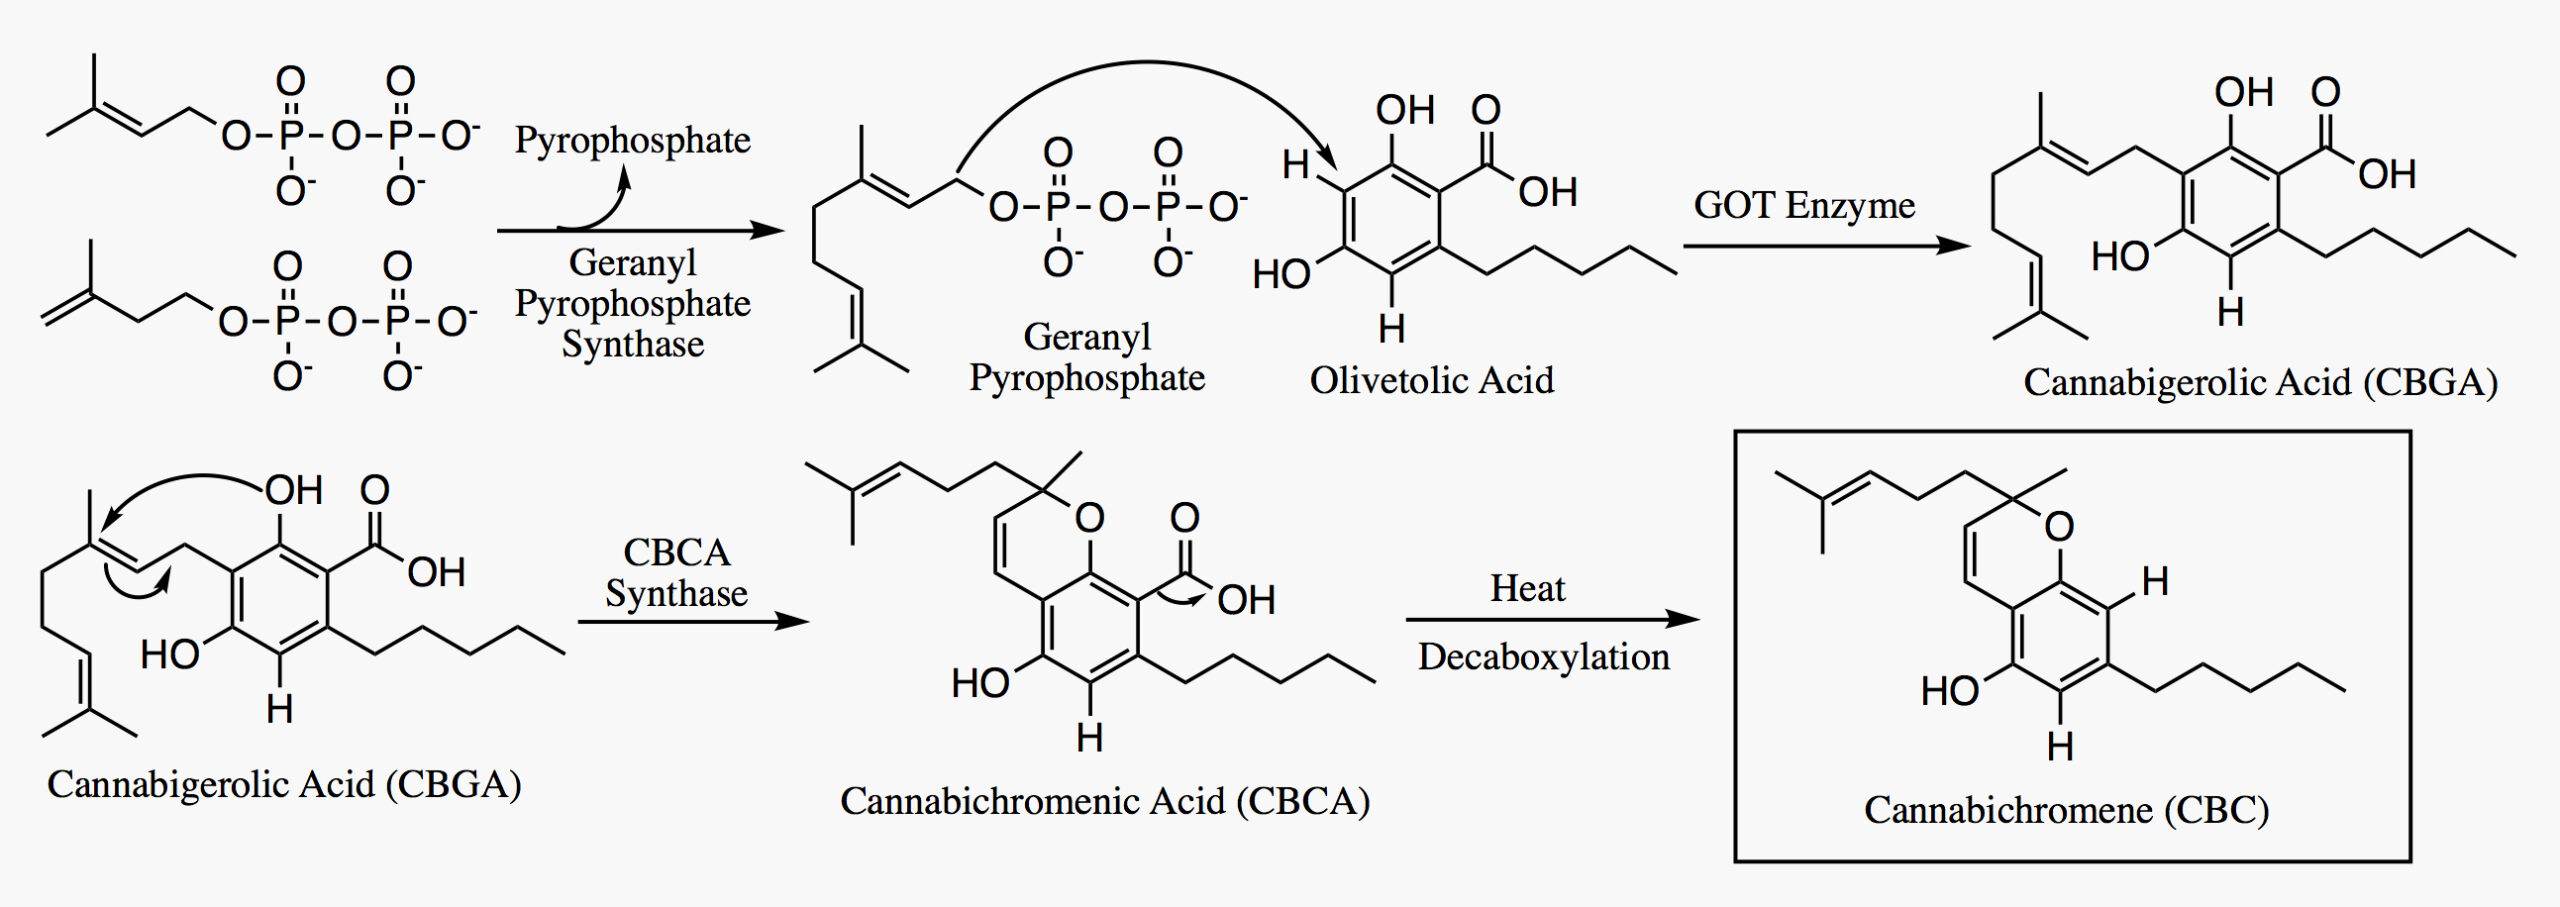 Biosynthesis of Cannabichromene (CBC)